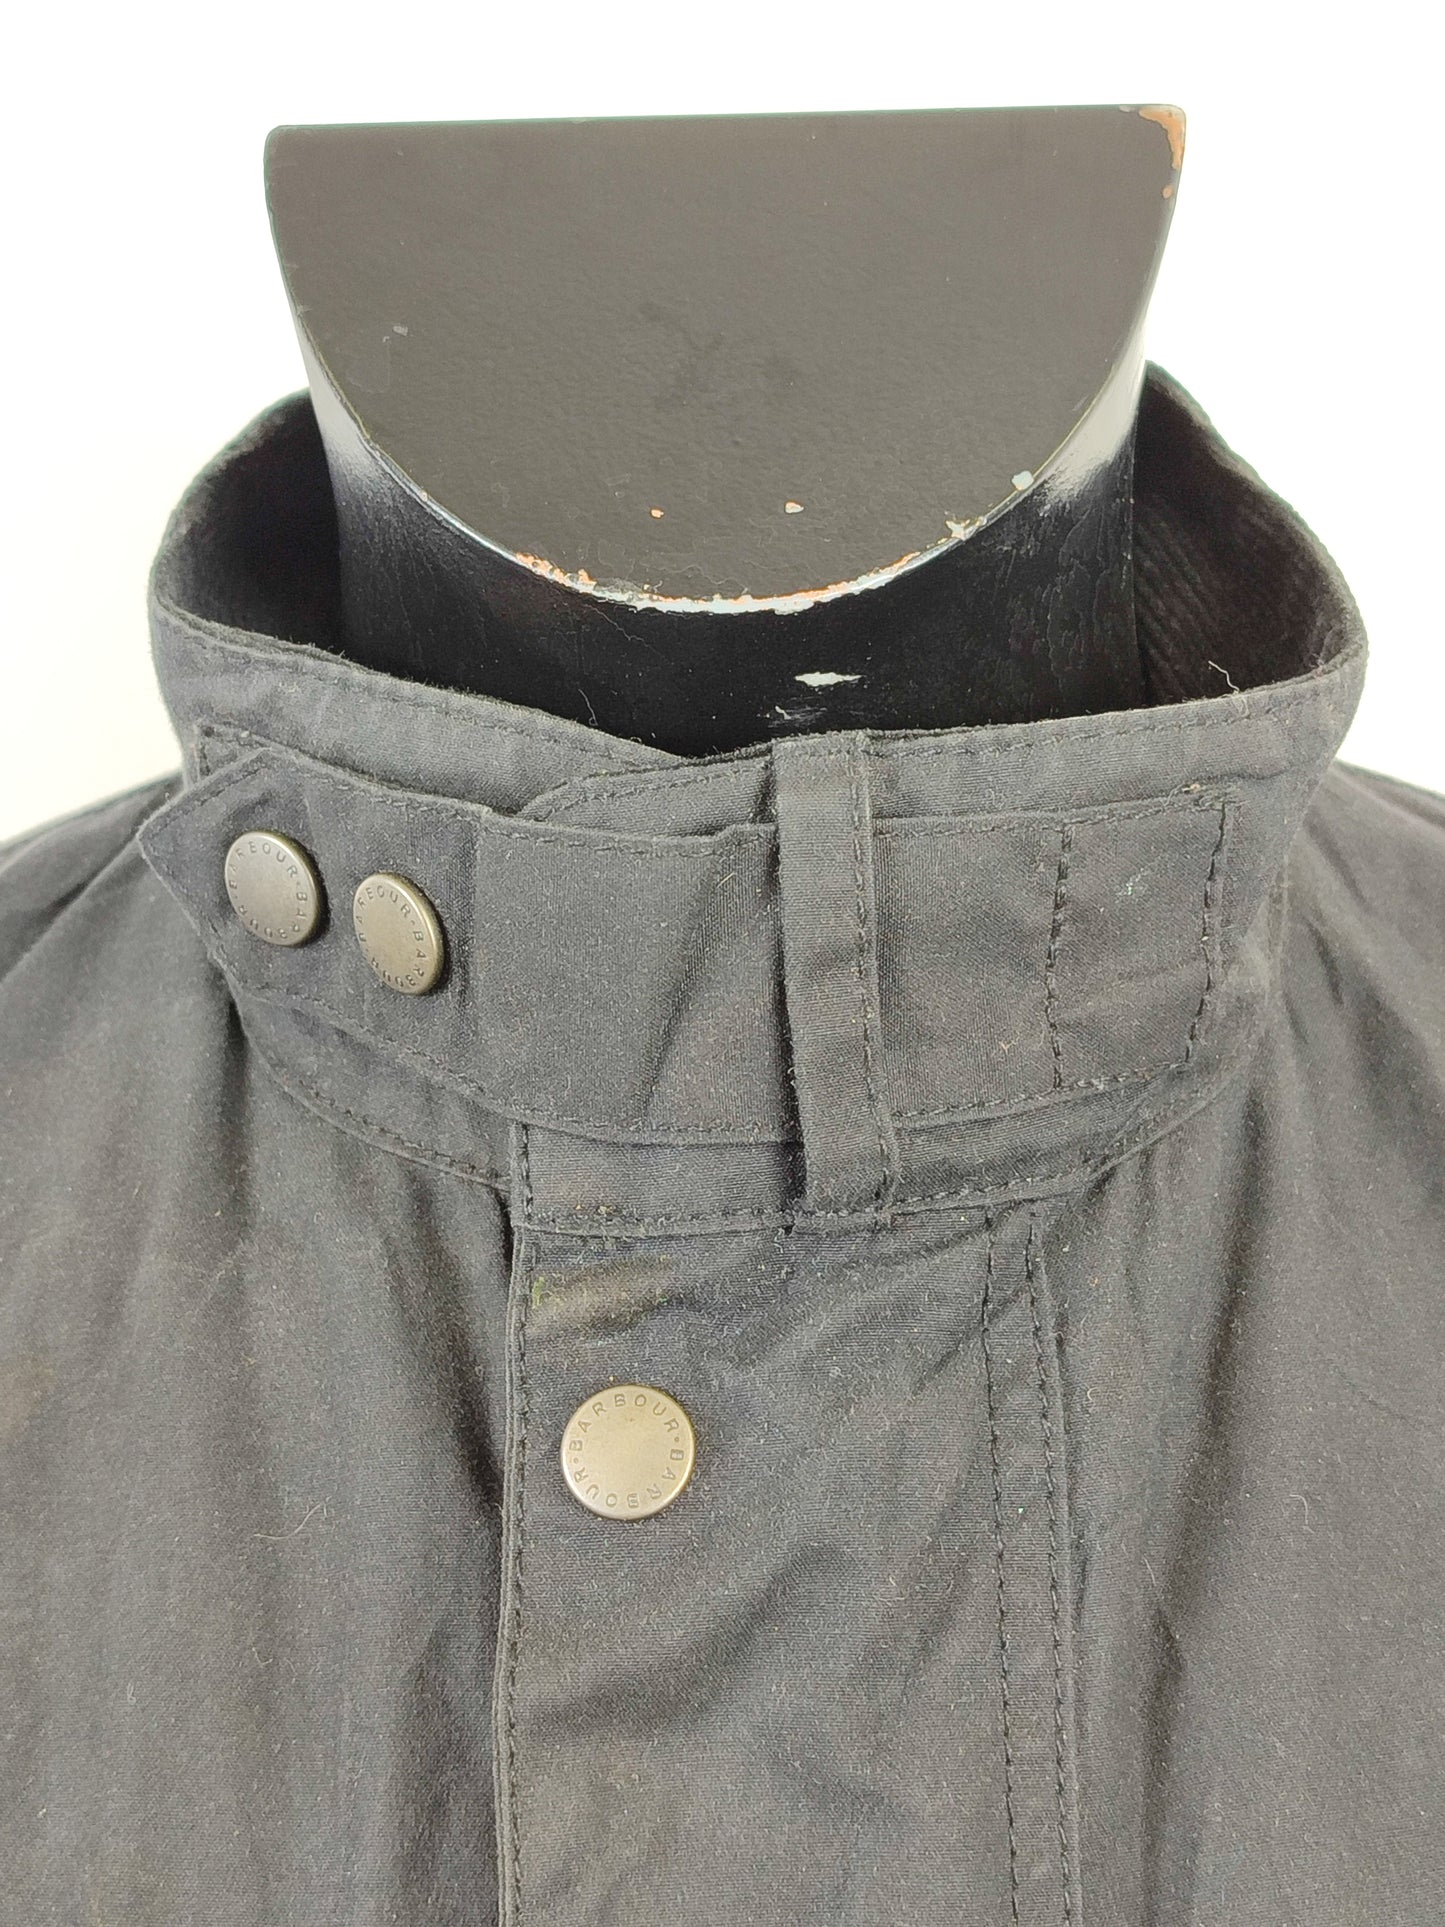 Giacca Barbour International Uomo Duke Nero Medium - Man Black Duke wax Jacket Size M